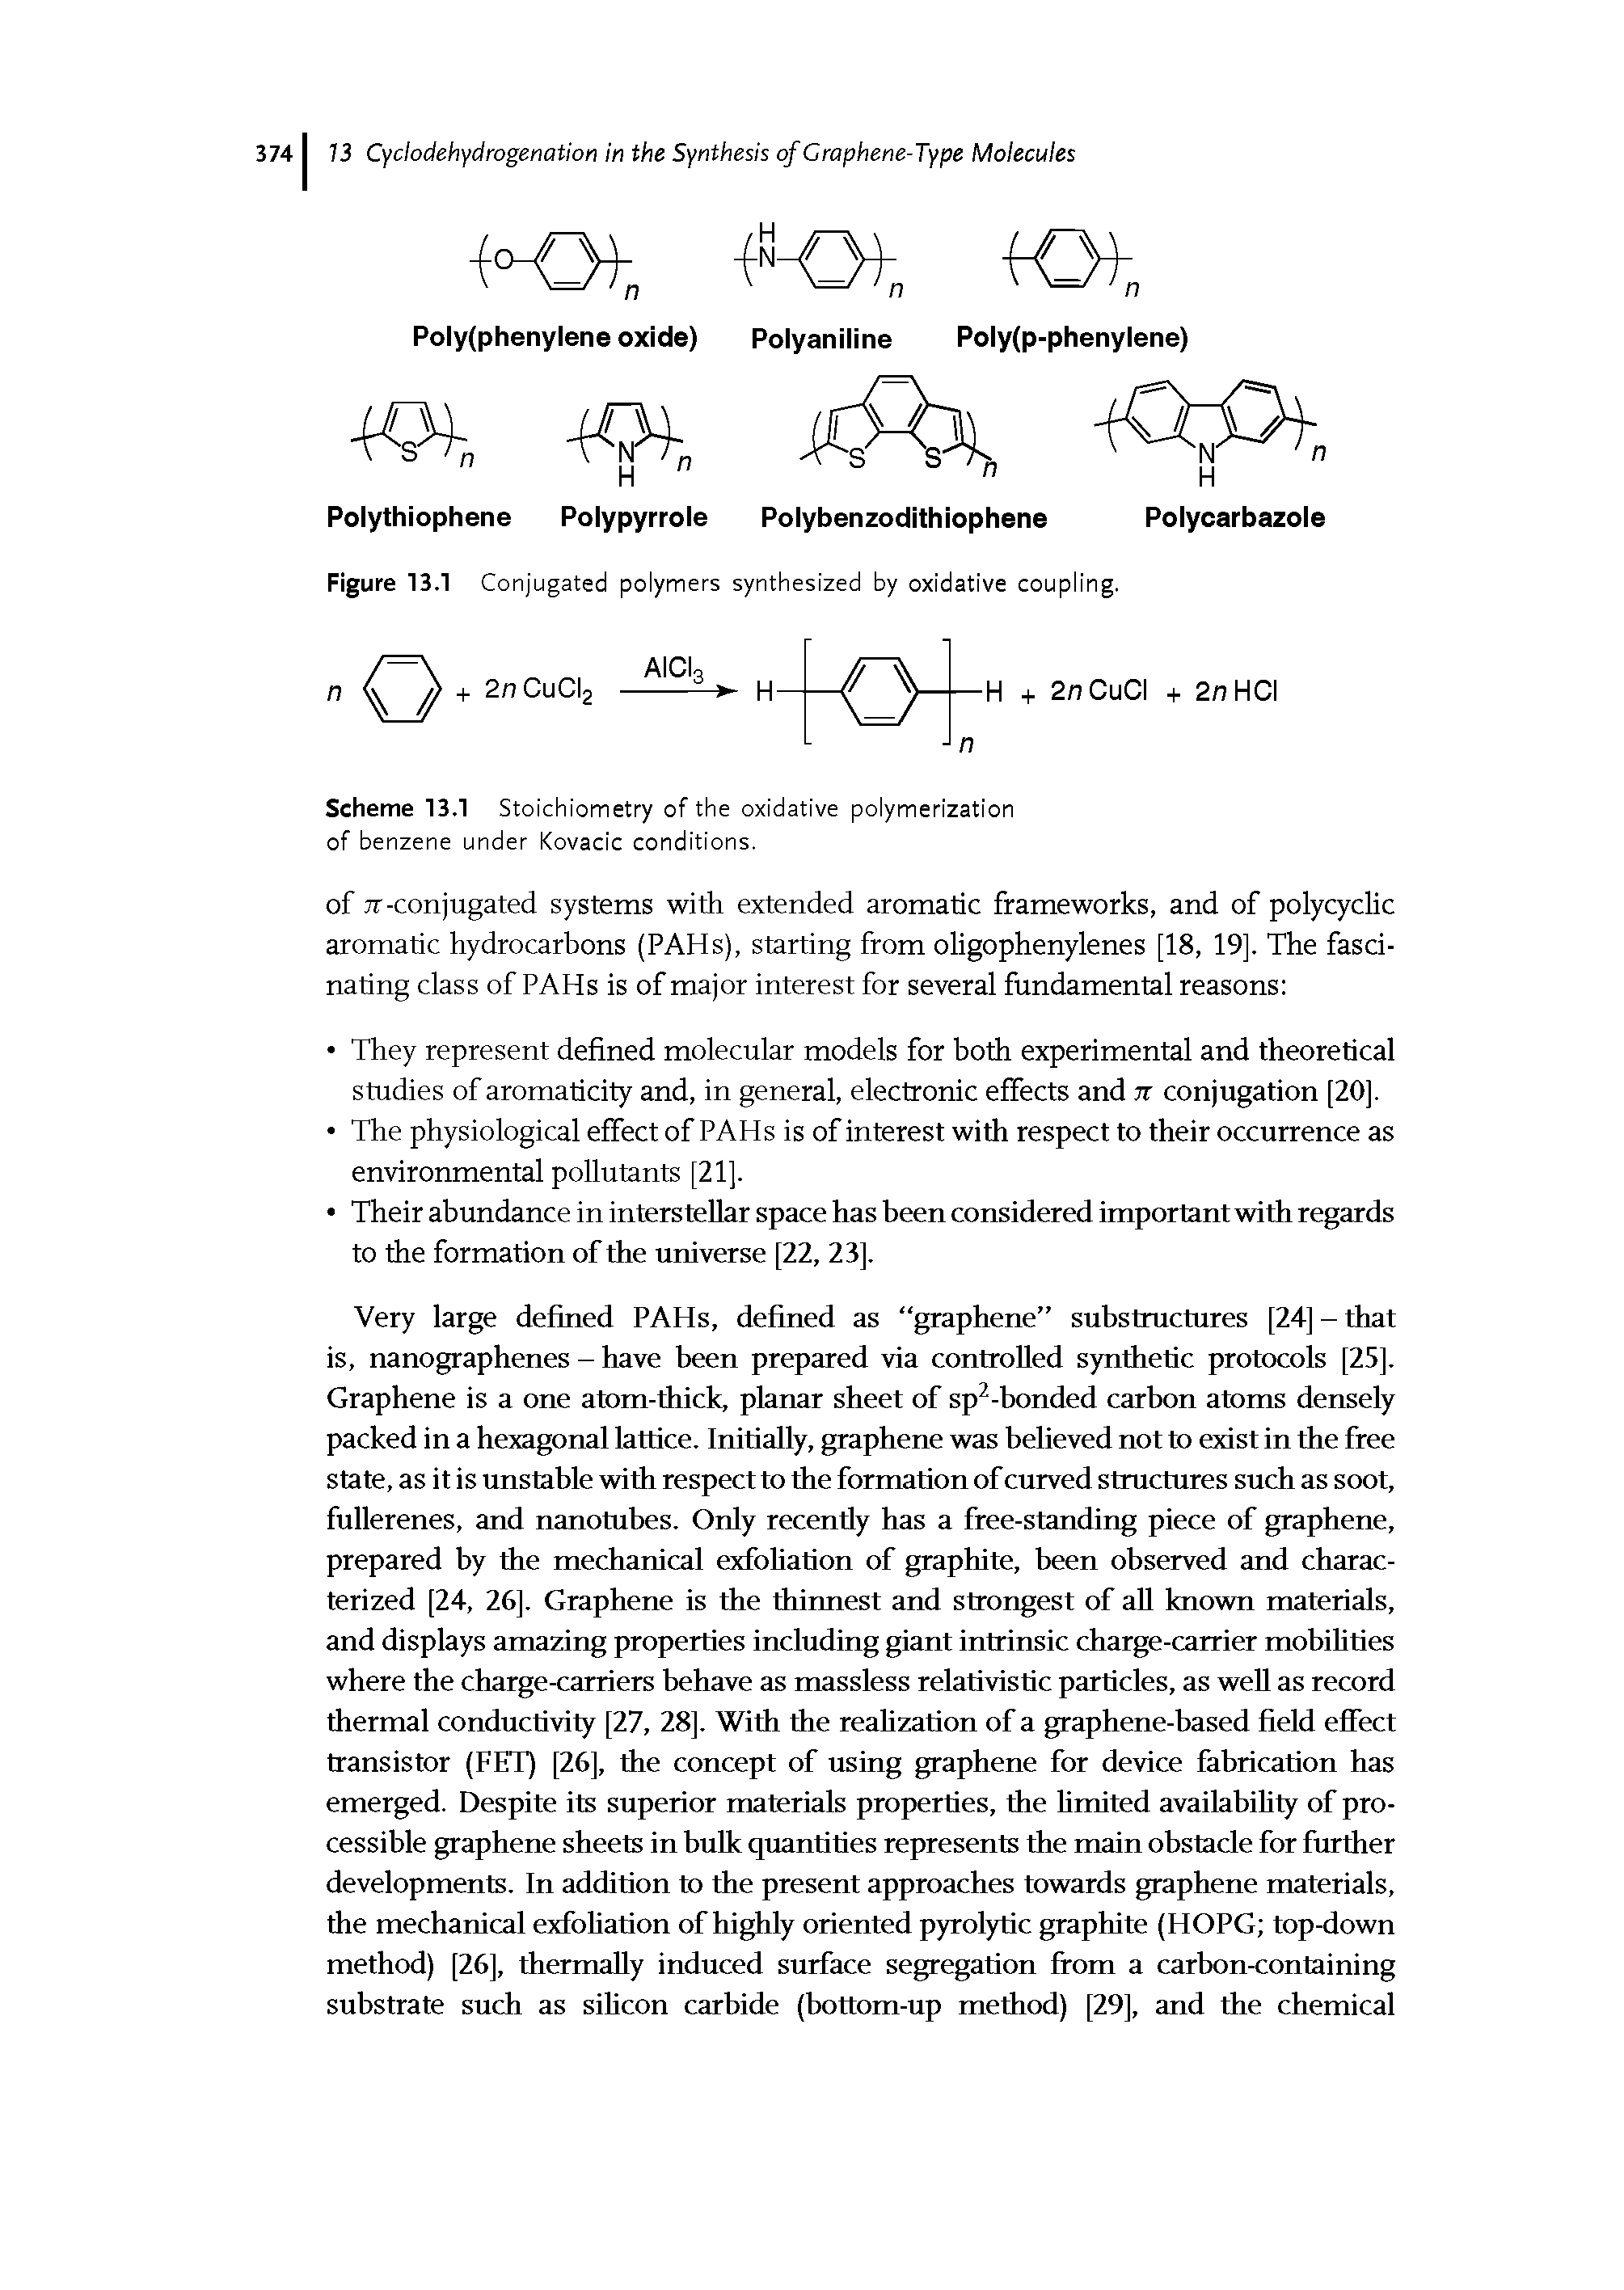 Scheme 13.1 Stoichiometry of the oxidative polymerization of benzene under Kovacic conditions.